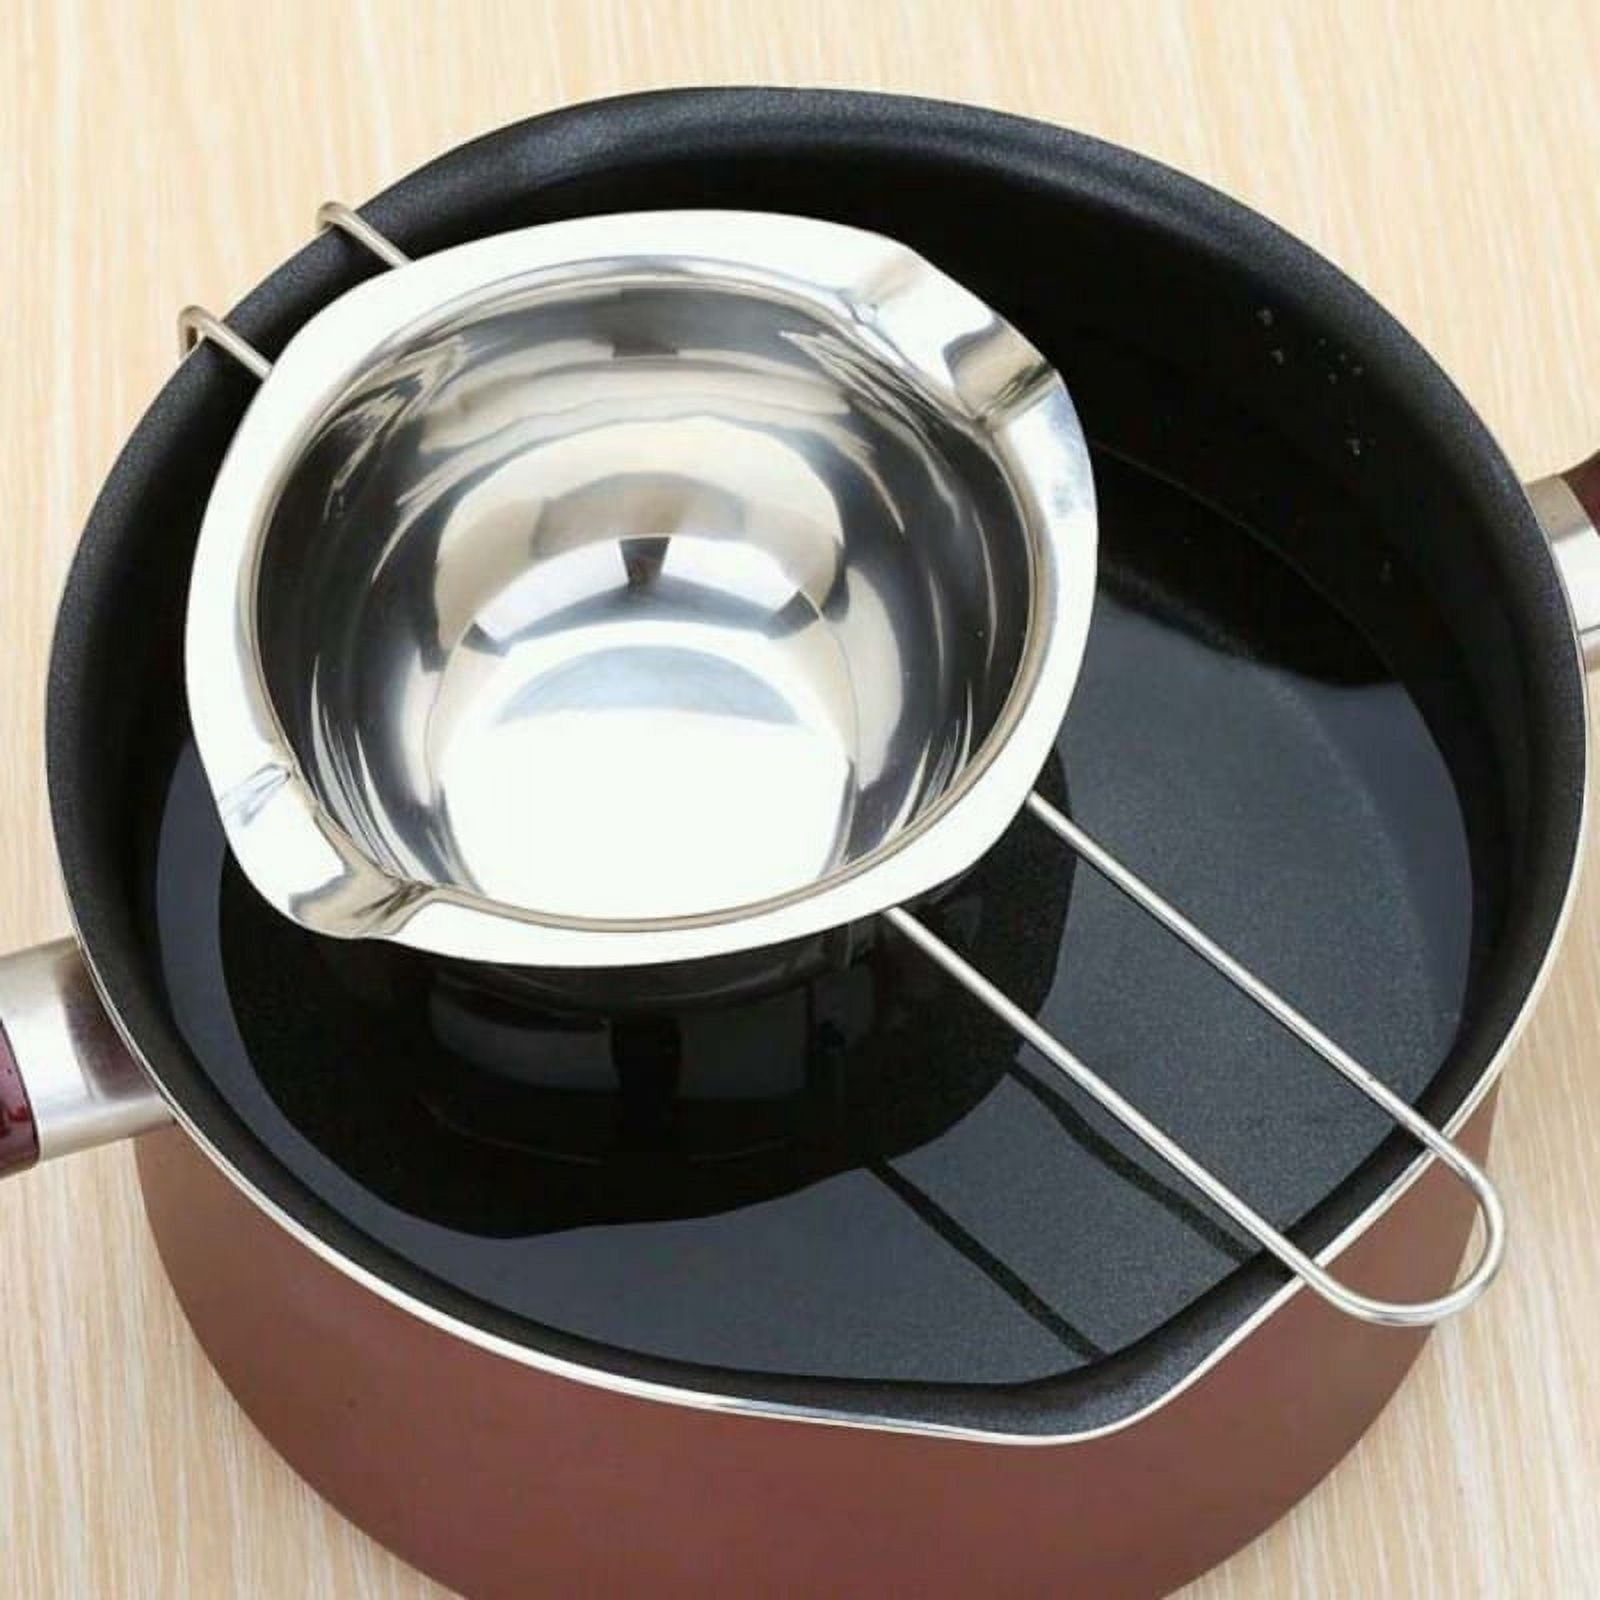 Zulay Kitchen Zulay Double Boiler Chocolate Melting Pot - 18/8